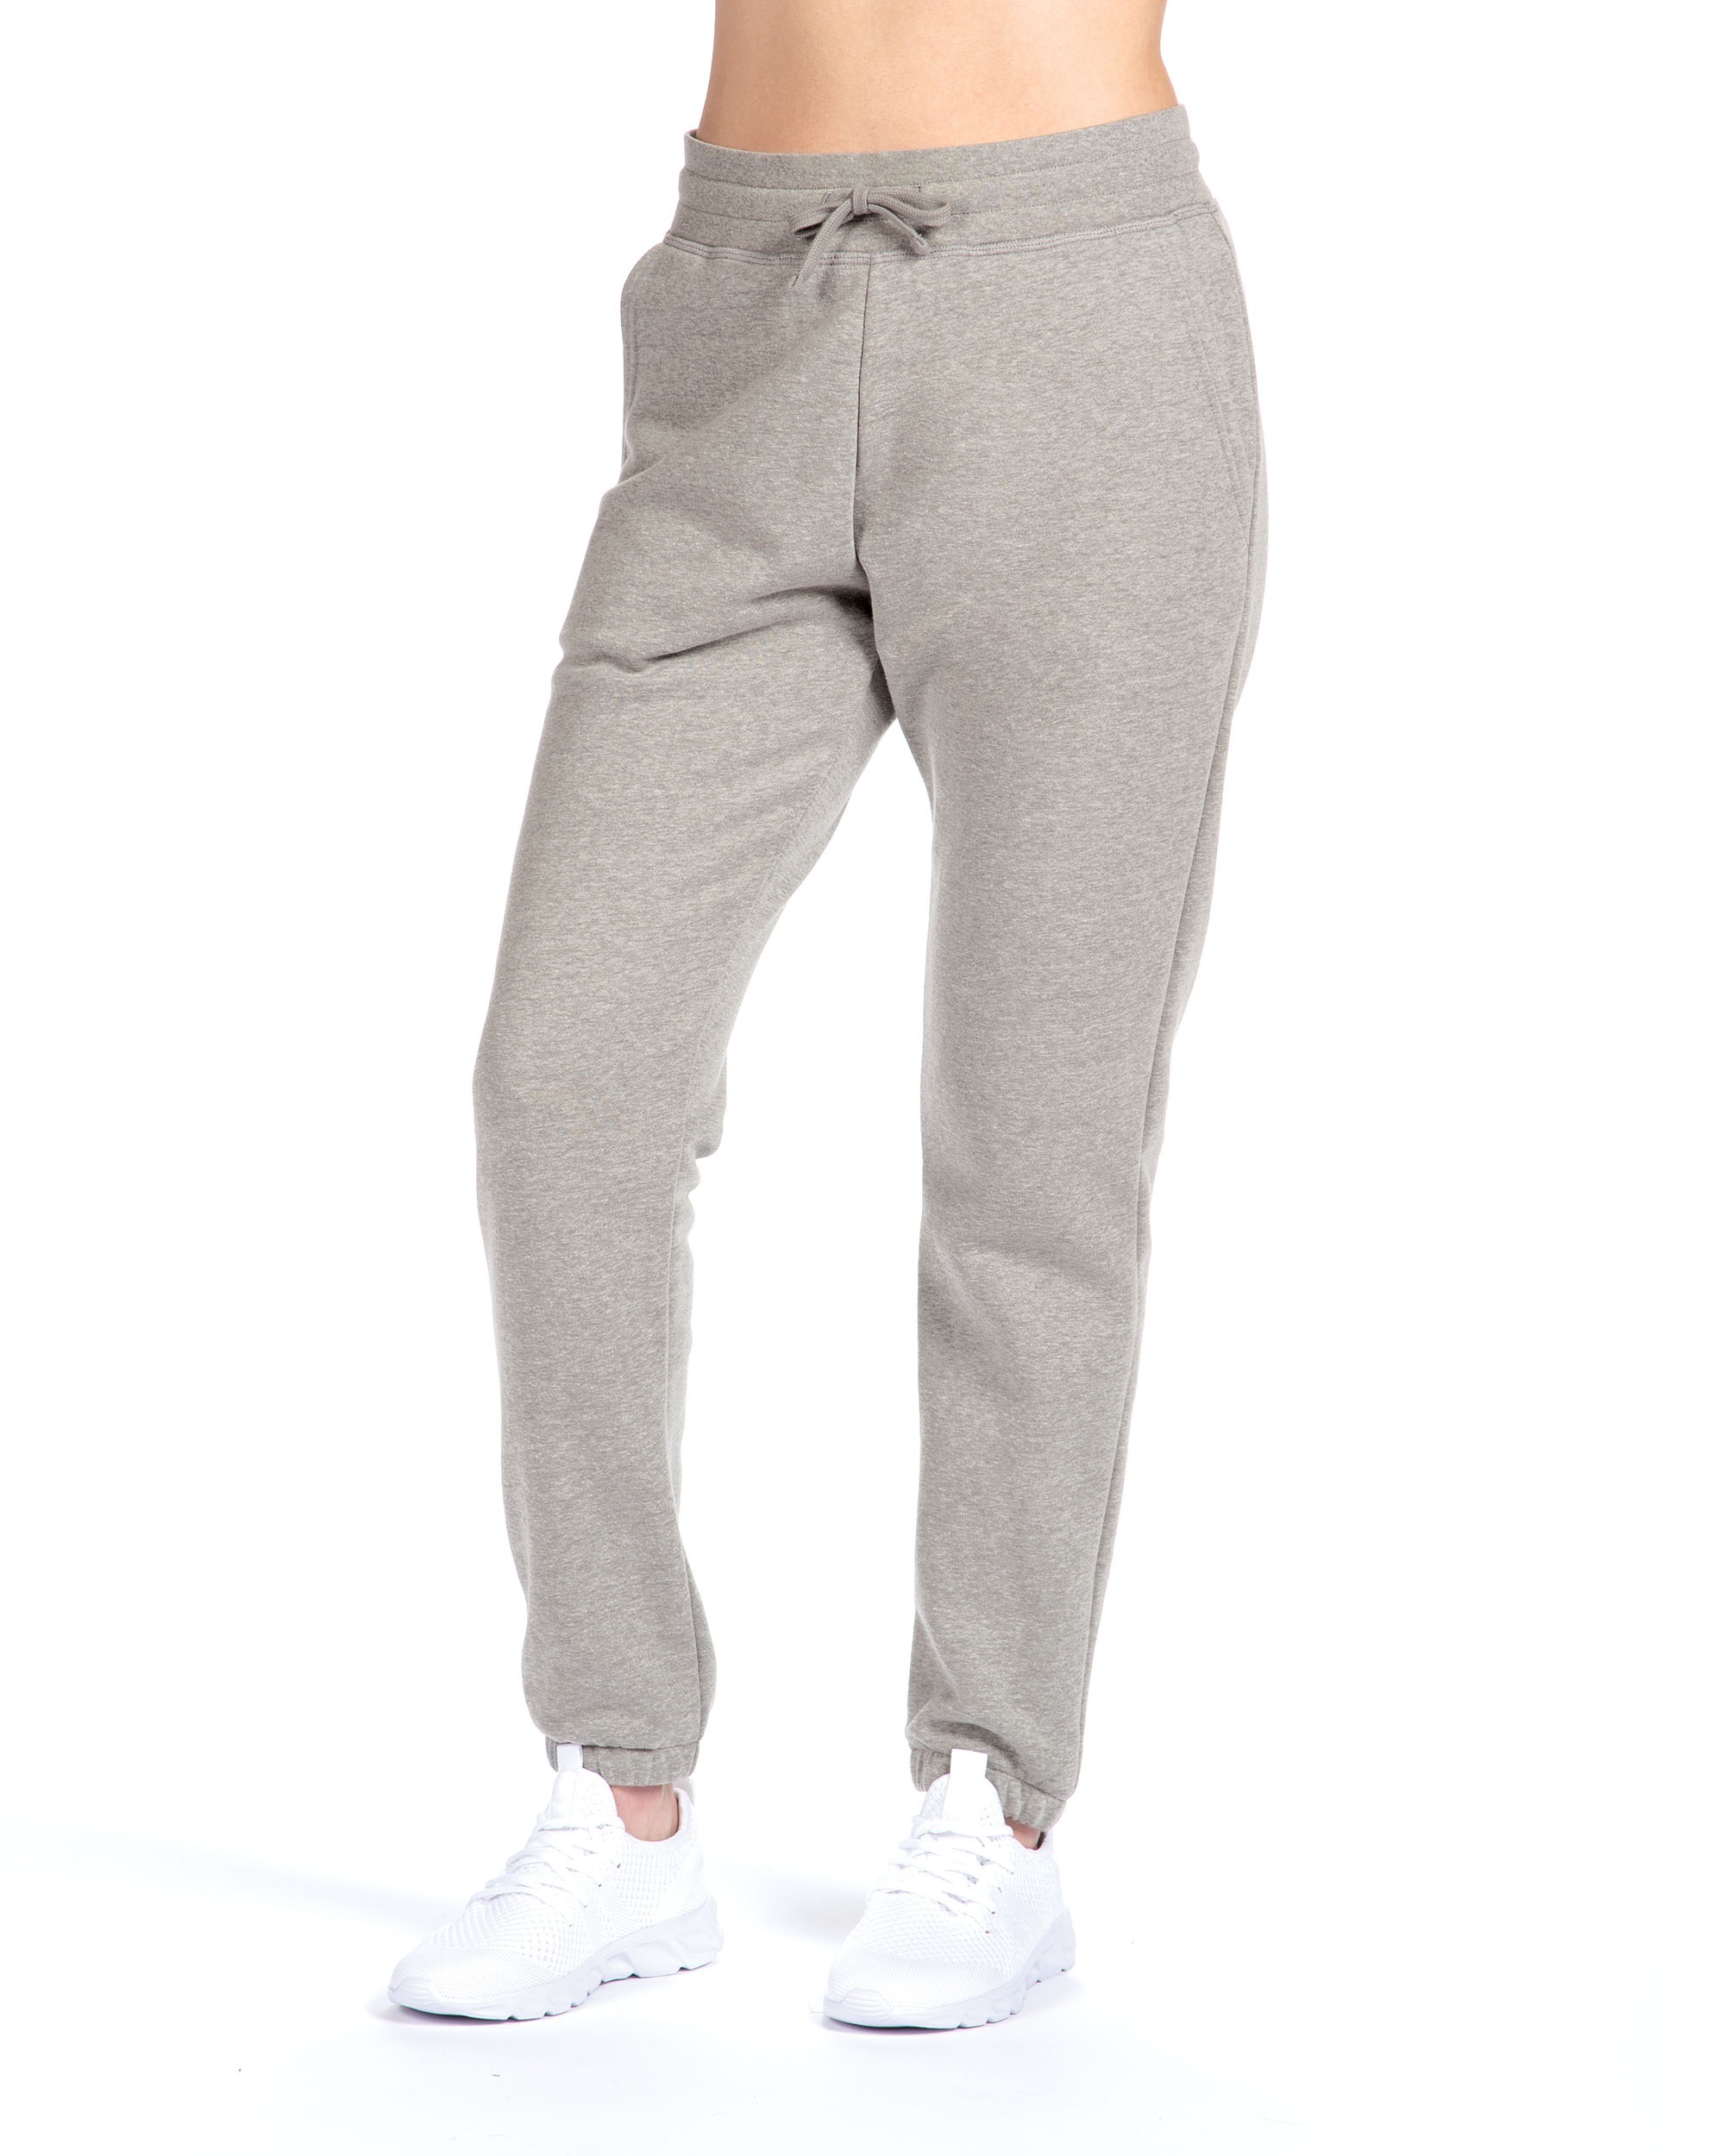 Next Level Apparel® 9803 Unisex Fleece Sweatpants